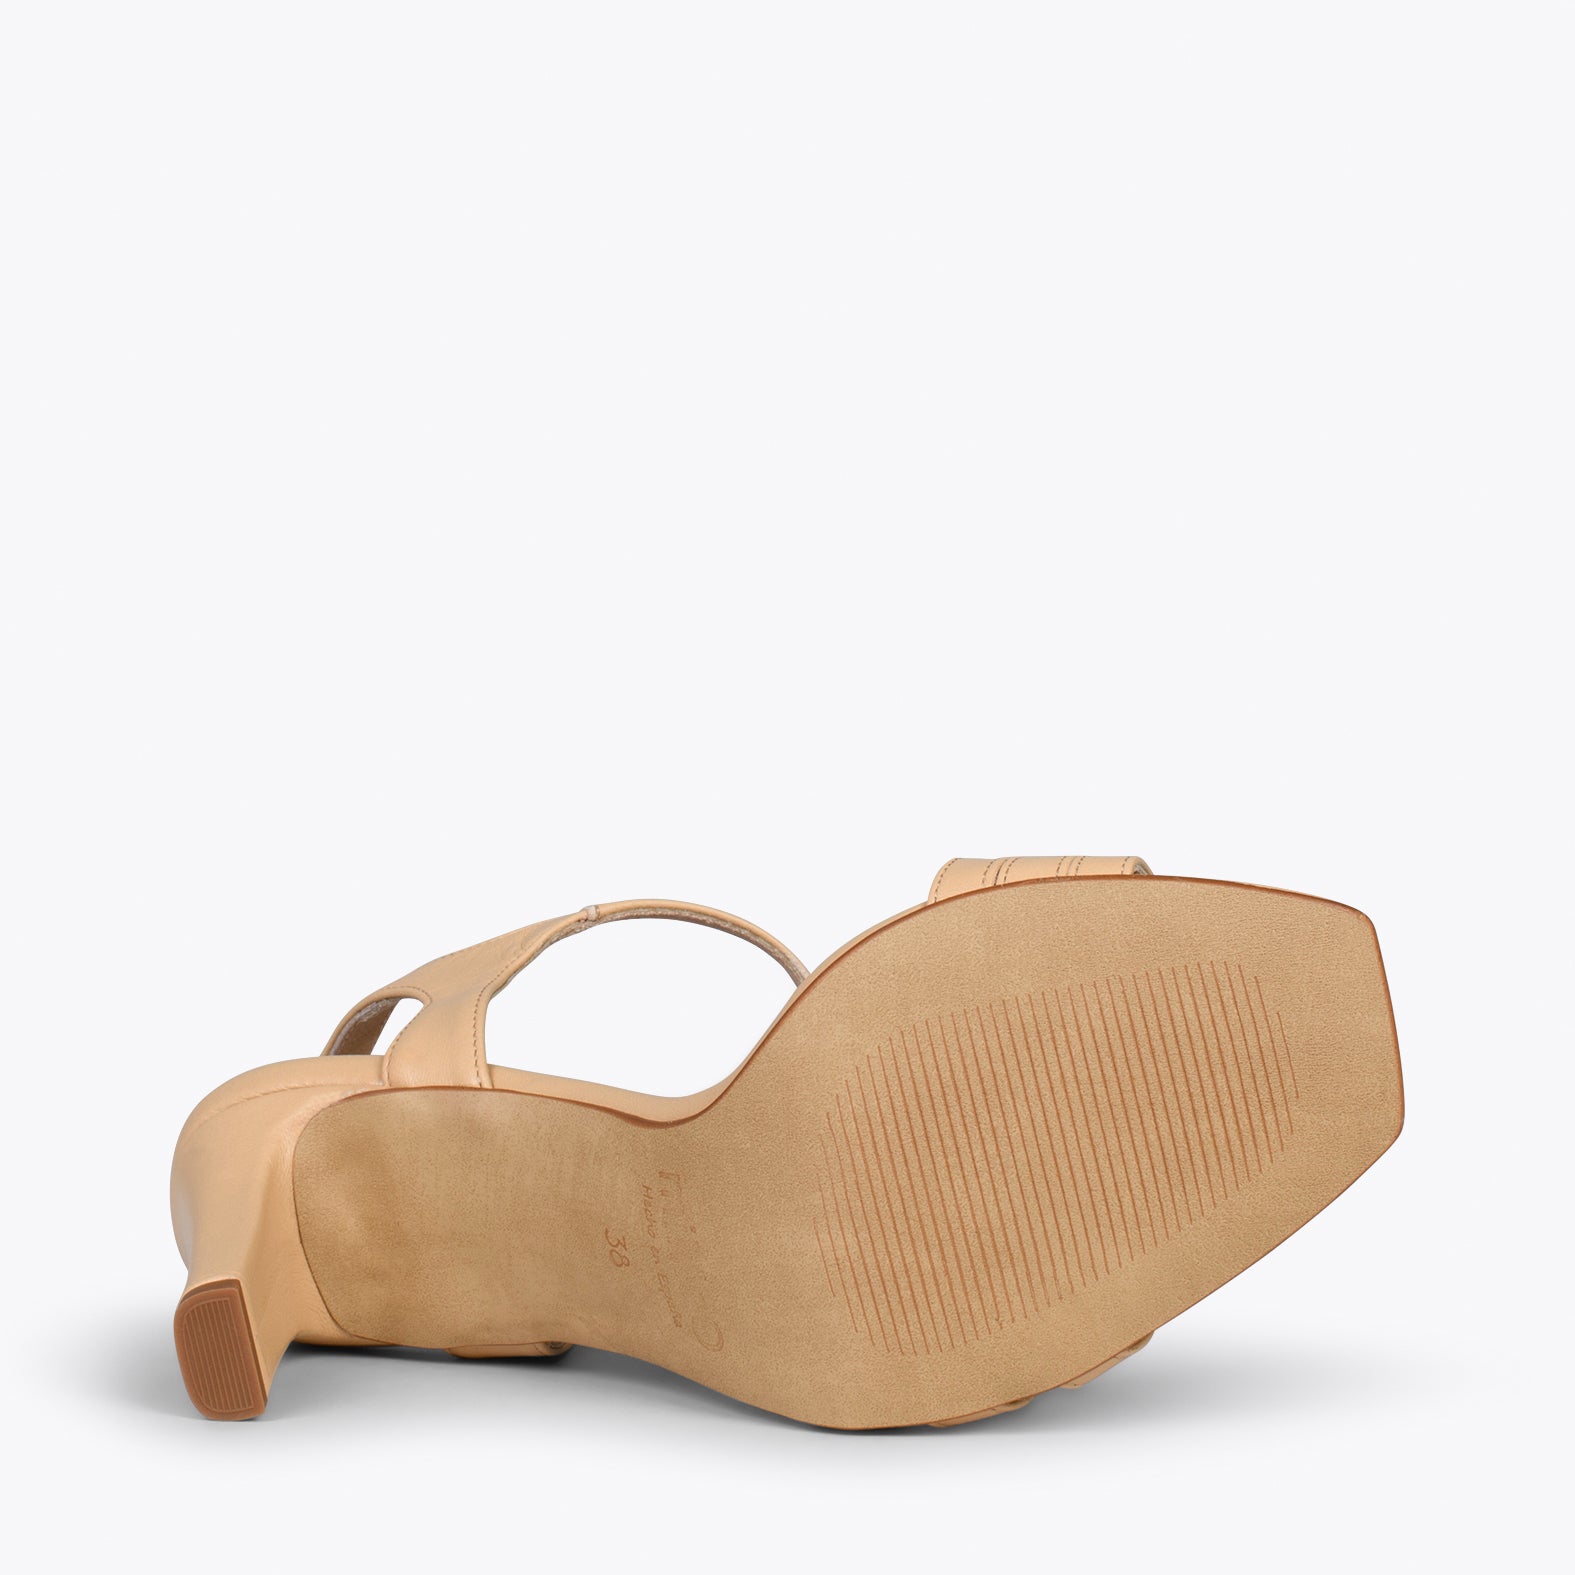 CANNES – SAND strap high heel sandal